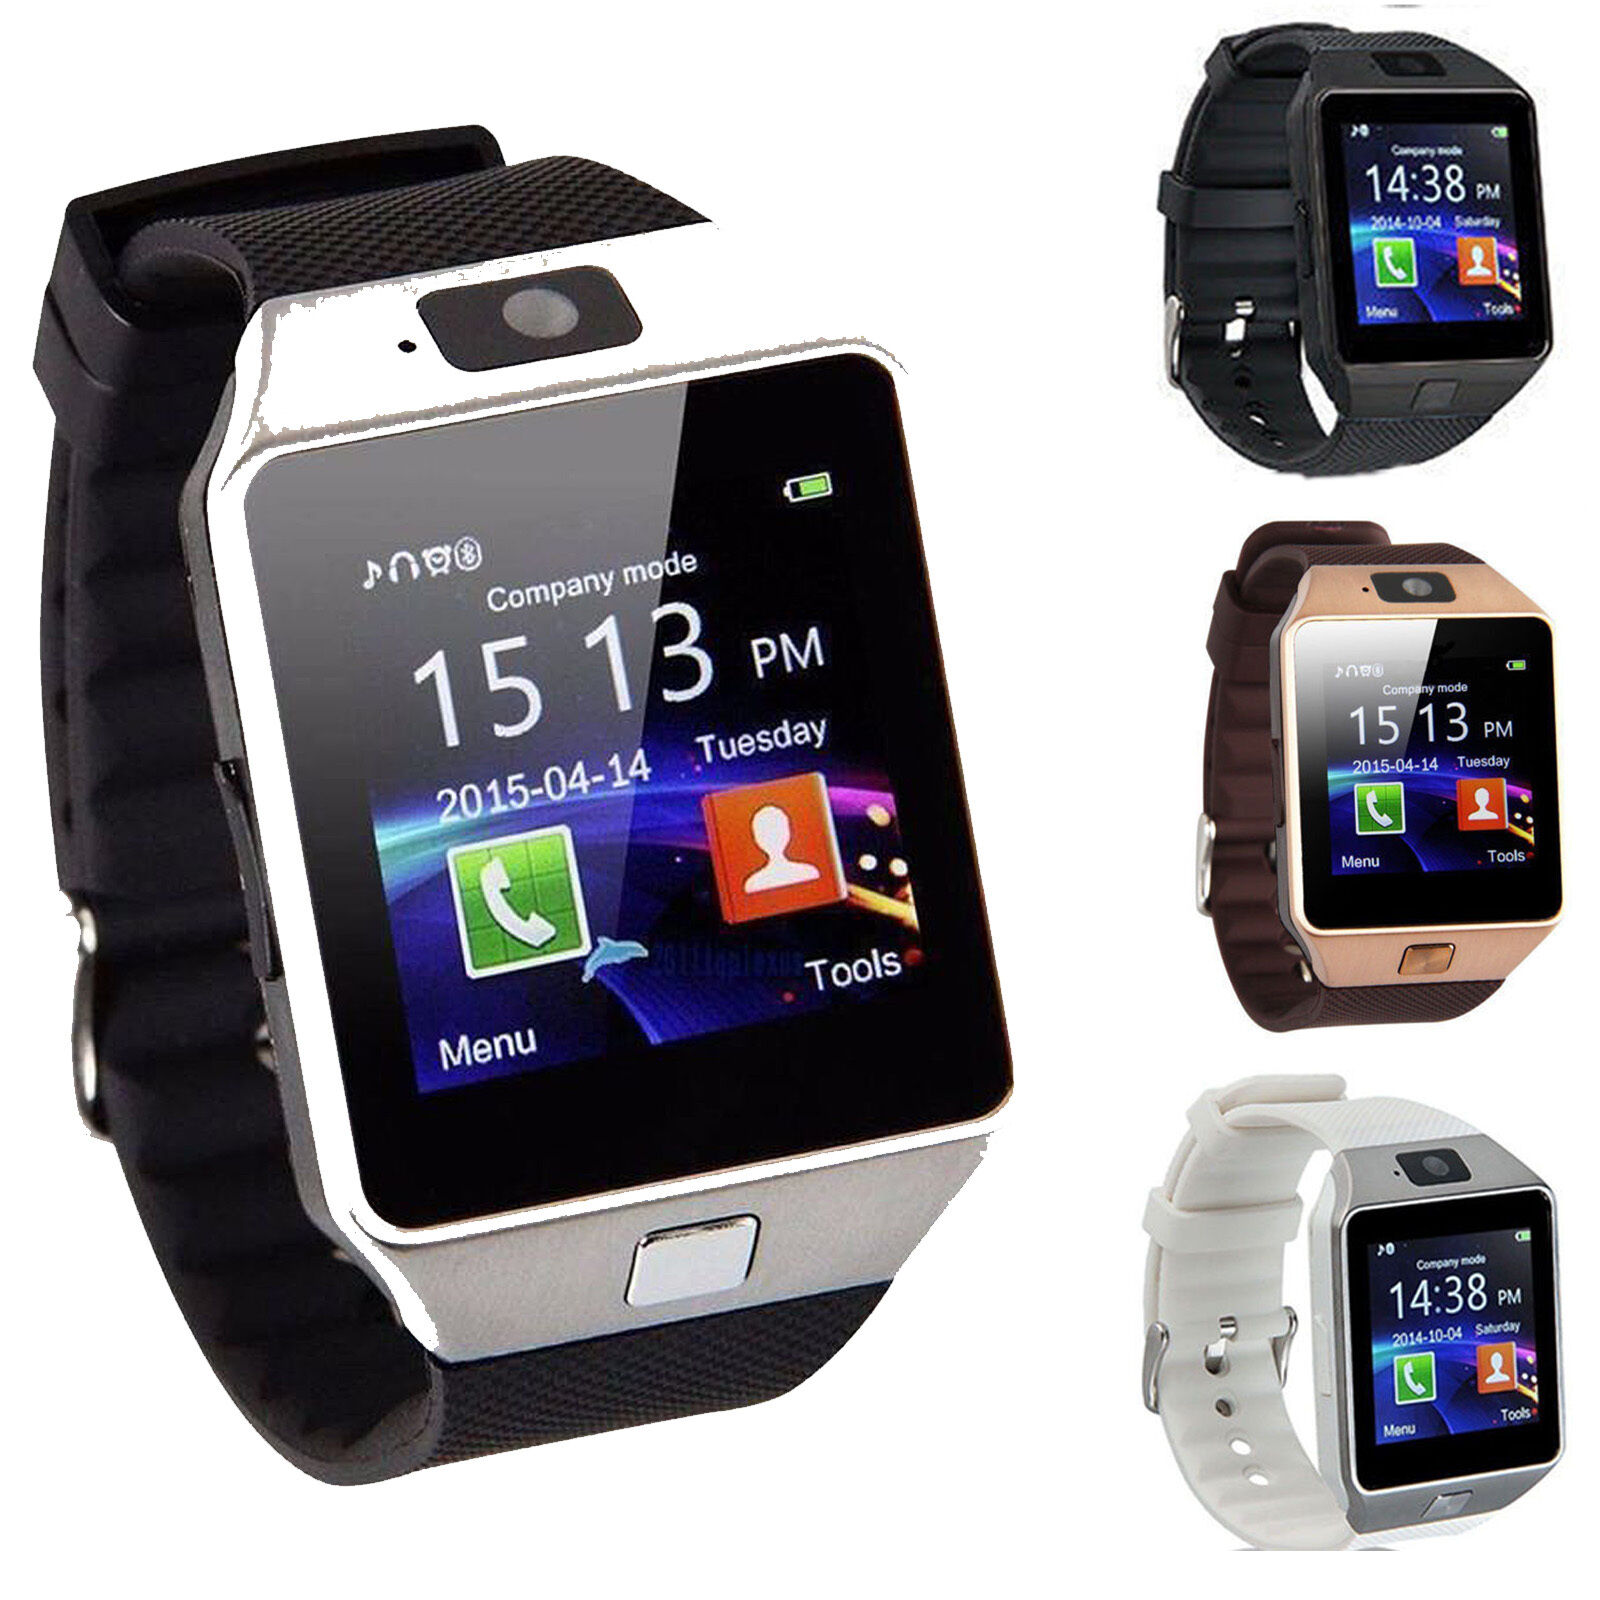 DZ09 Bluetooth Smart Watch Phone + Camera SIM Card For Android IOS Phones Wirez4U SM-889